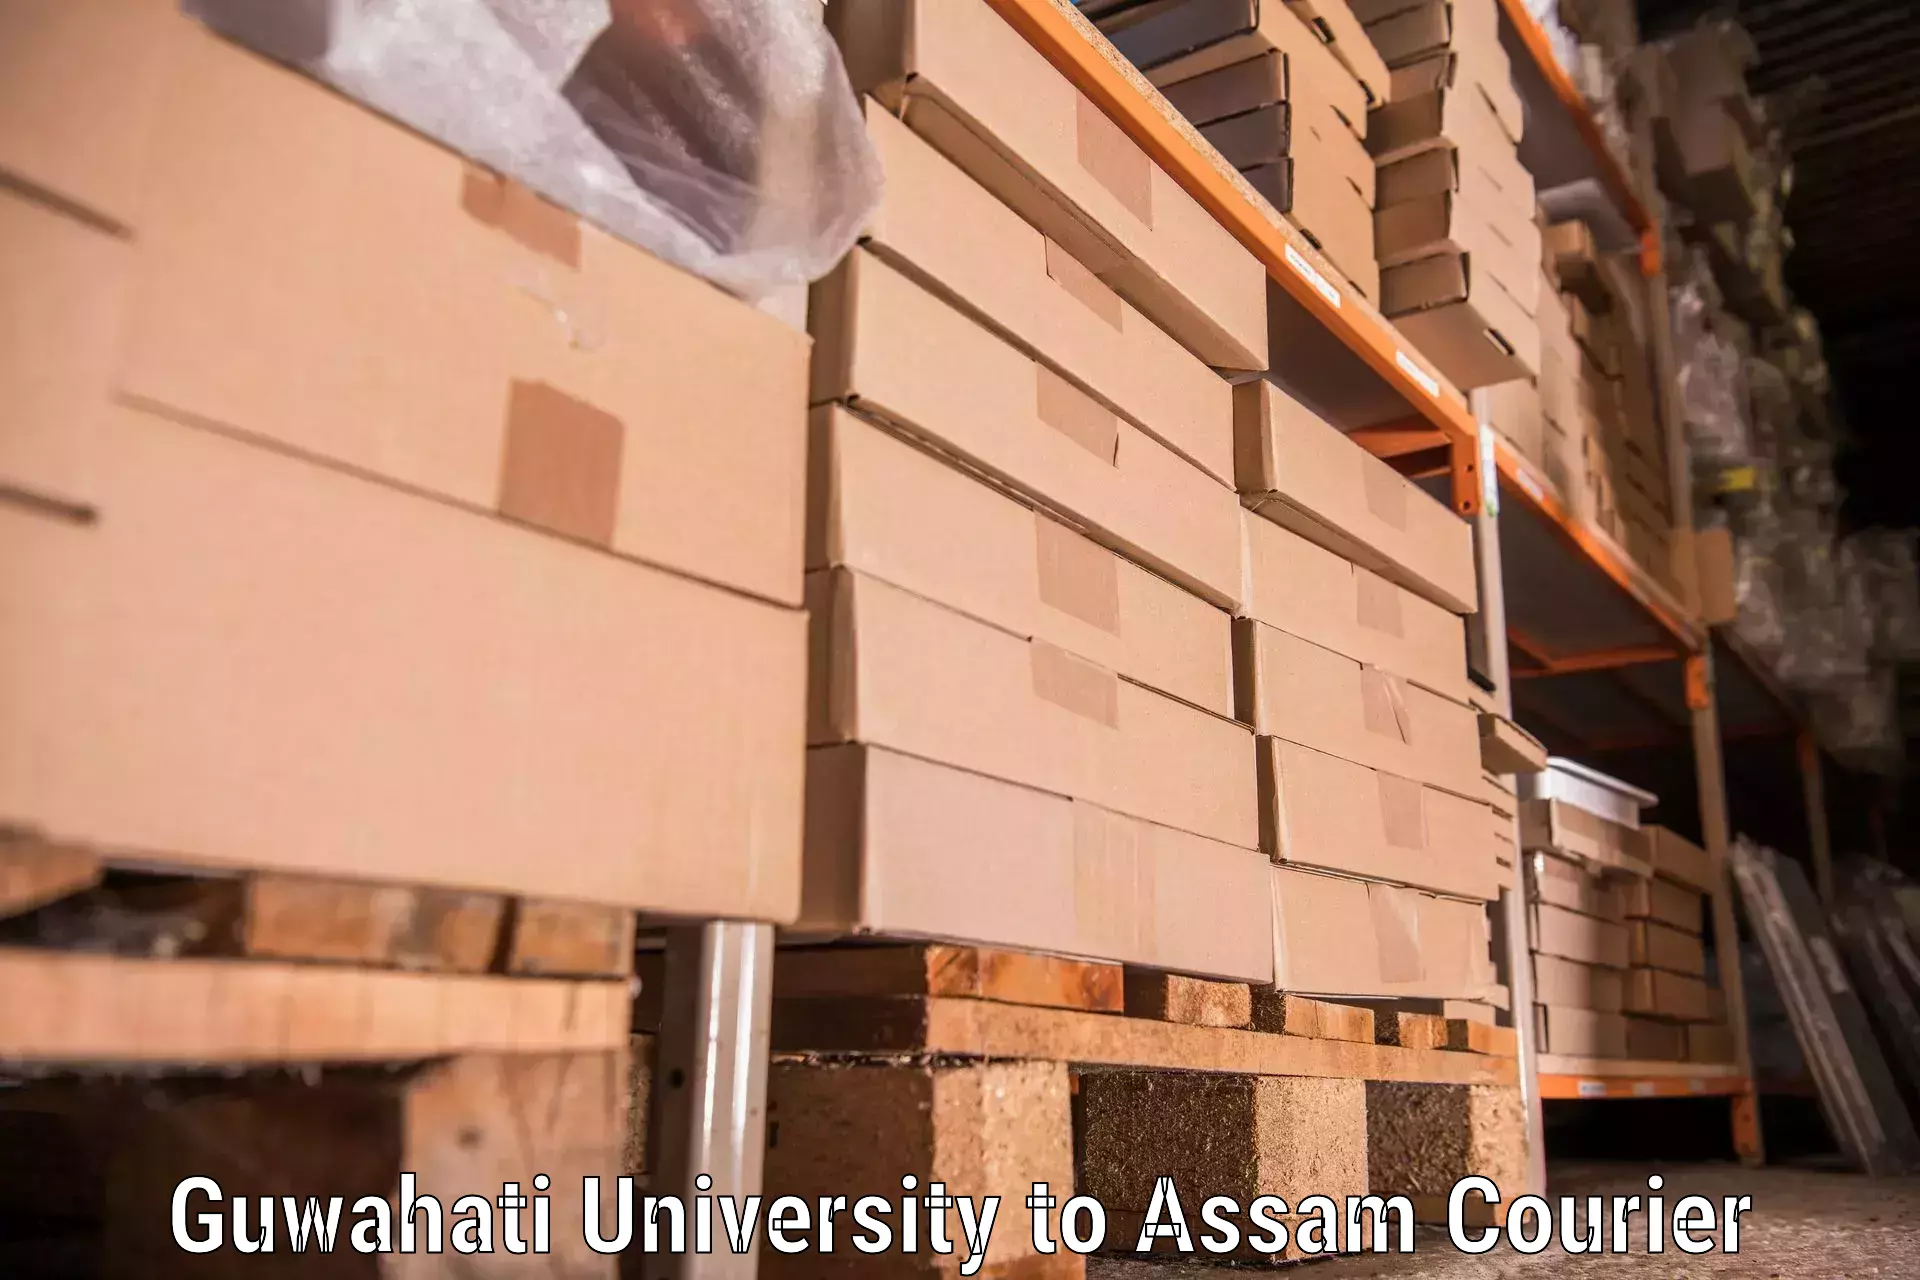 Quality moving services Guwahati University to Hojai Lanka